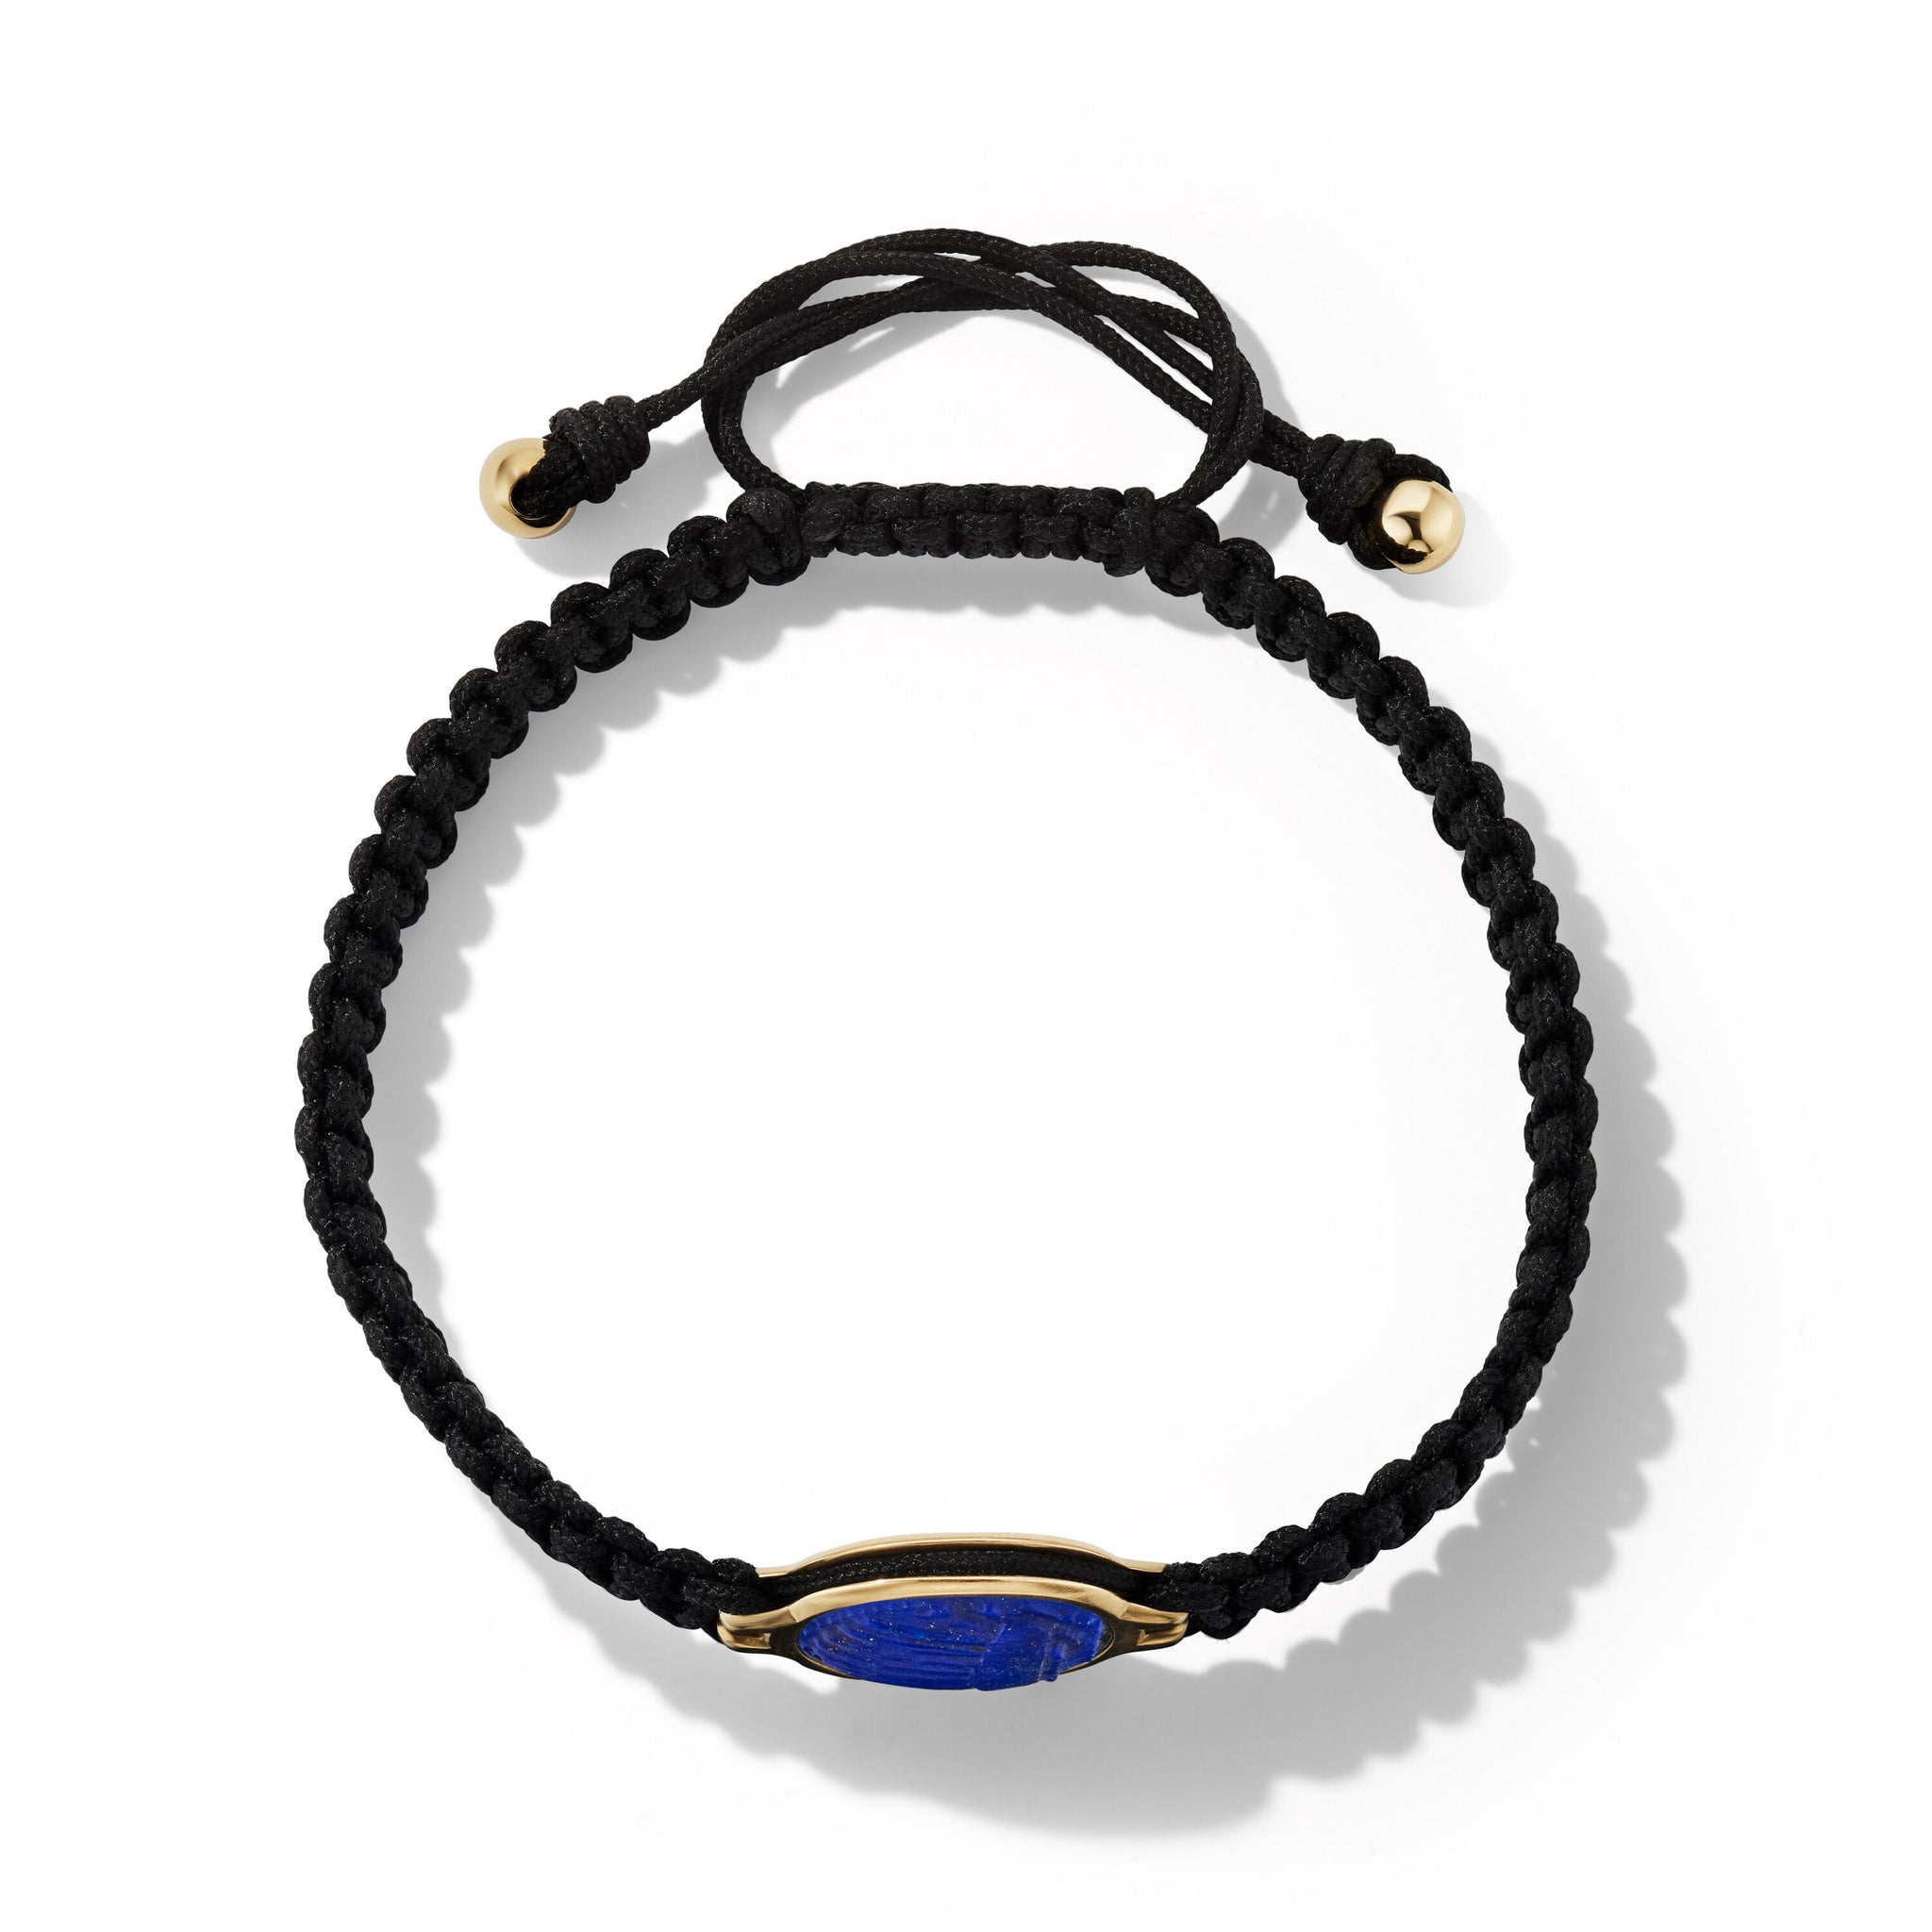 Cairo Scarab Black Nylon Woven Bracelet with Lapis and 18K Yellow Gold